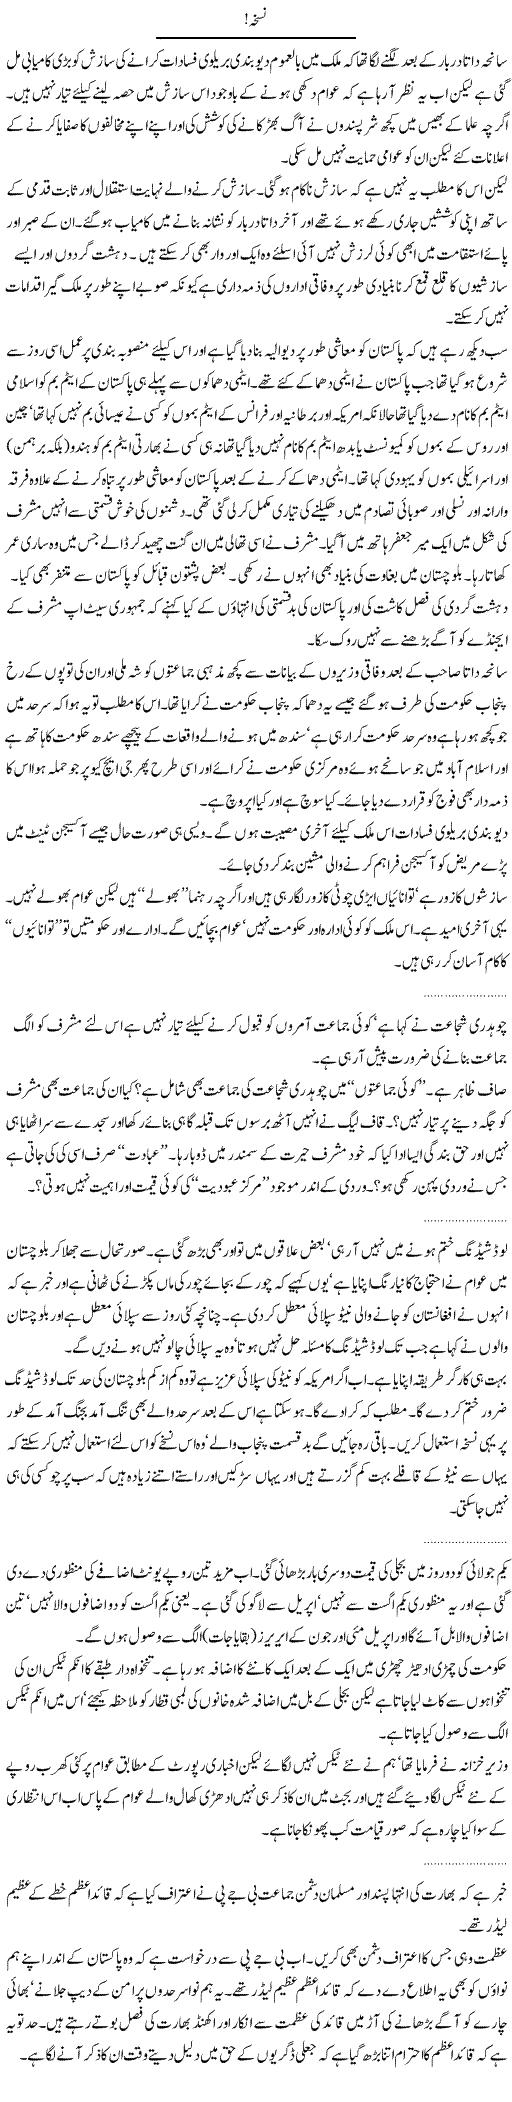 Nuskhaa Express Column Abdullah Tariq 6 July 2010